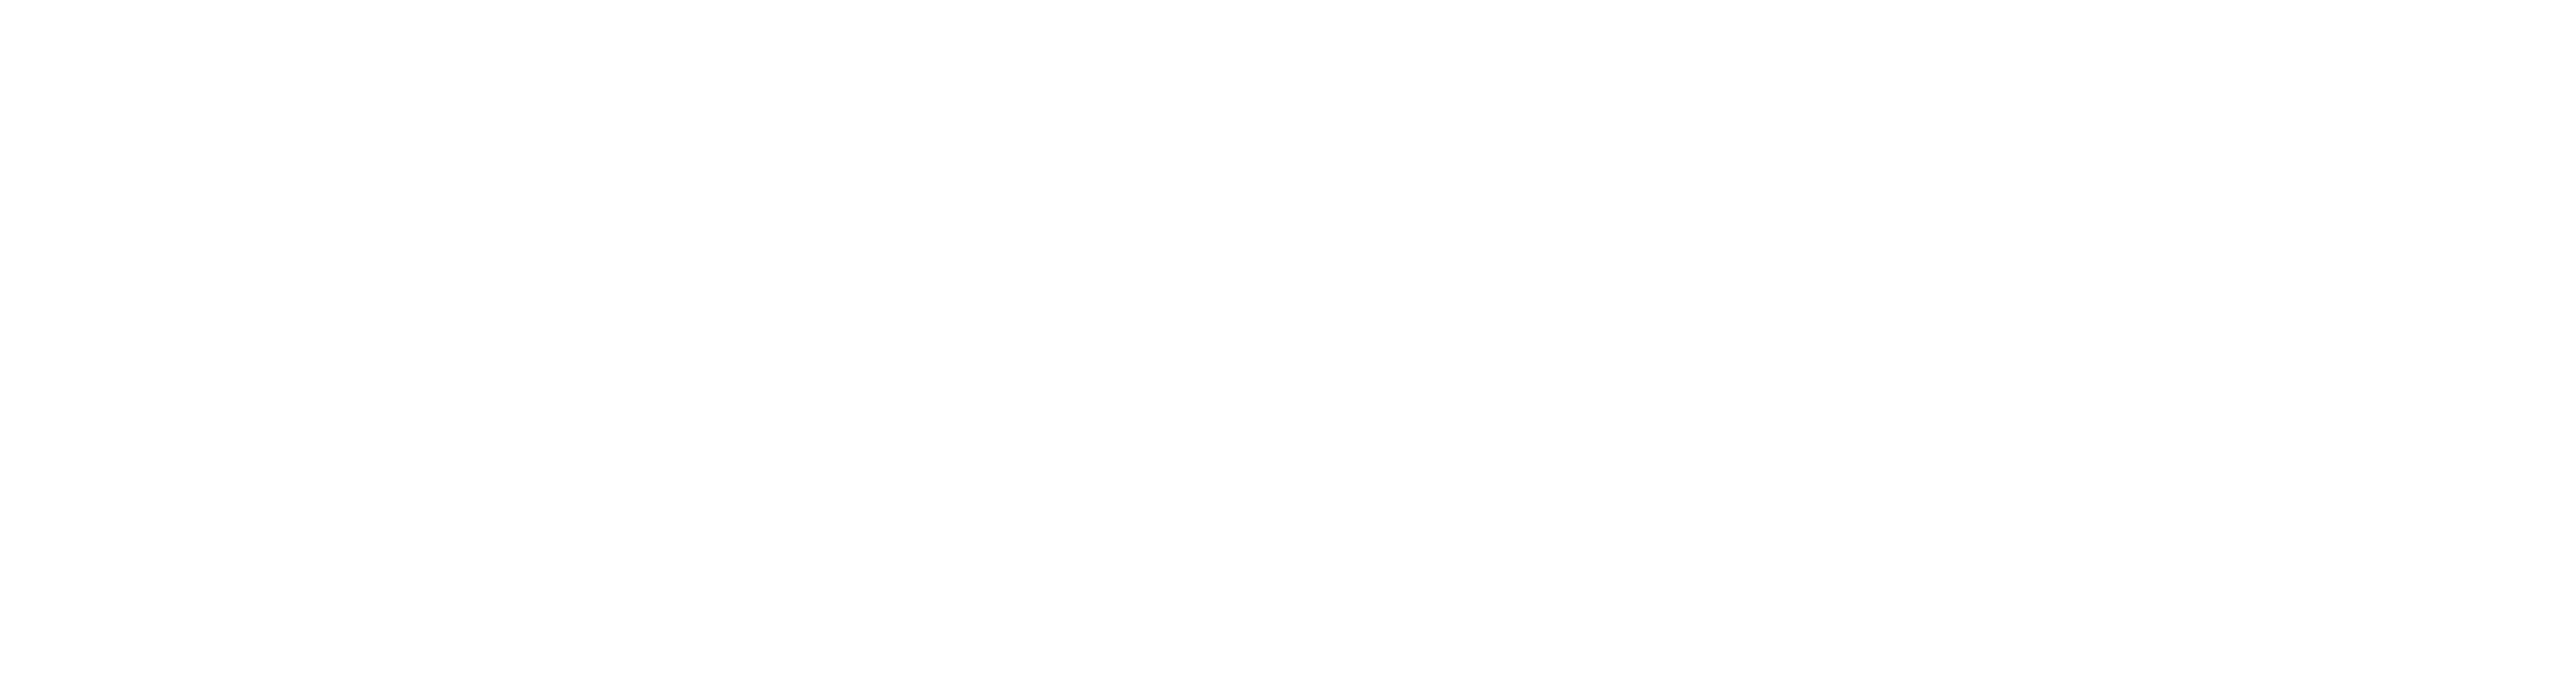 Elevate Women's Business Summit logo in white